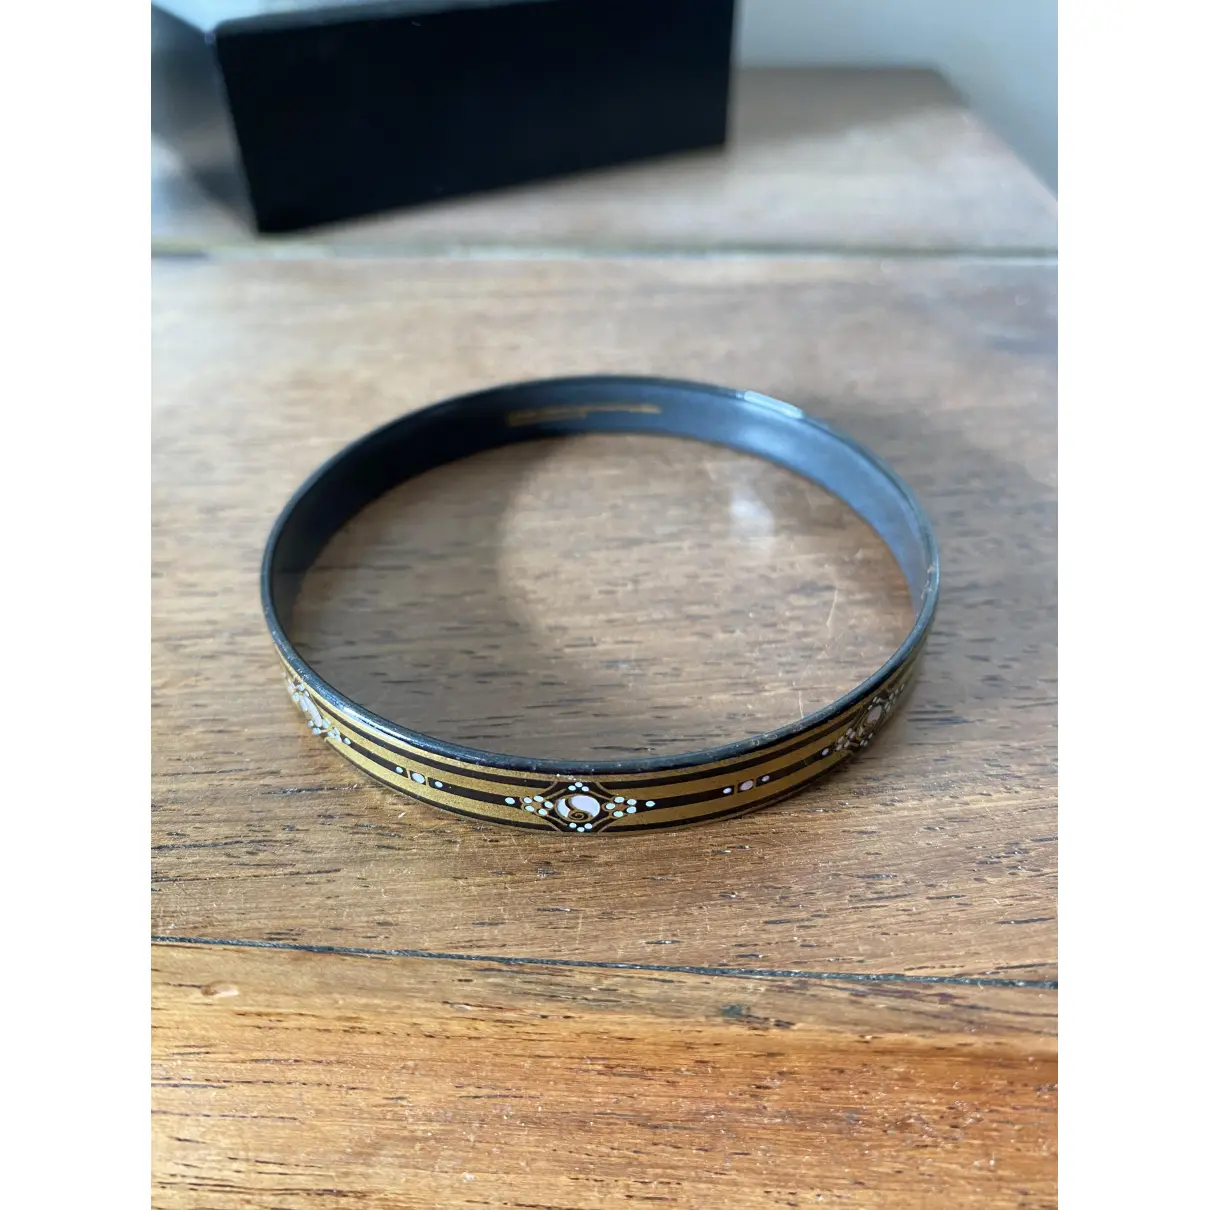 Buy Michaela Frey Ceramic bracelet online